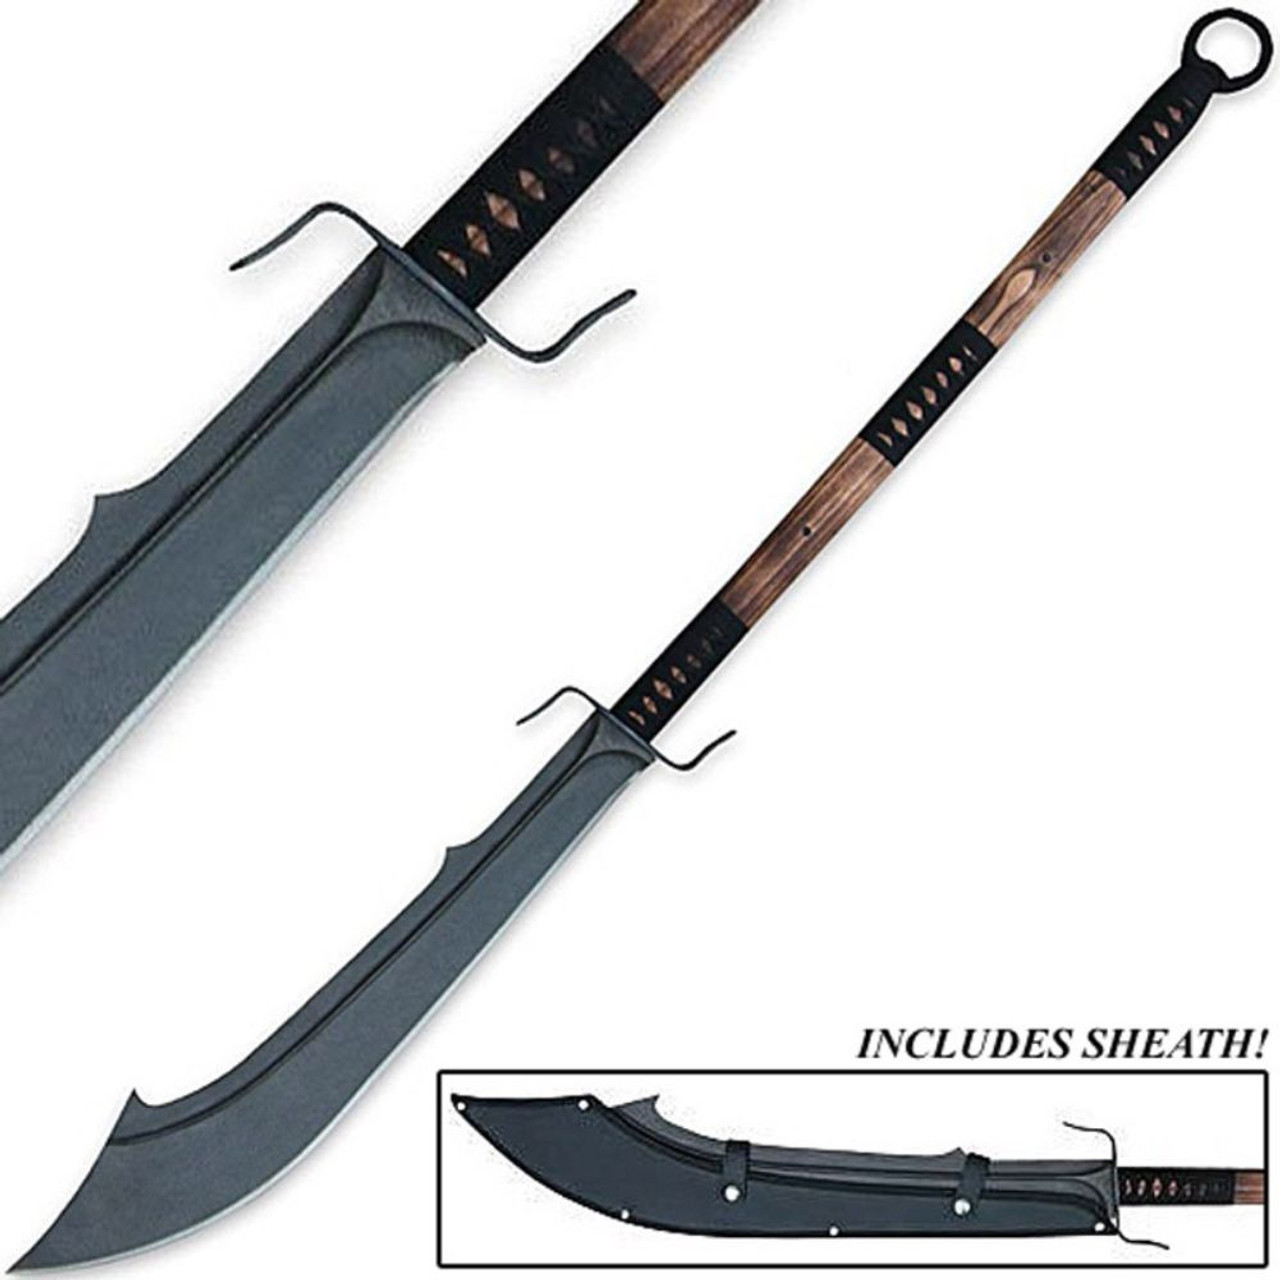 chinese war swords